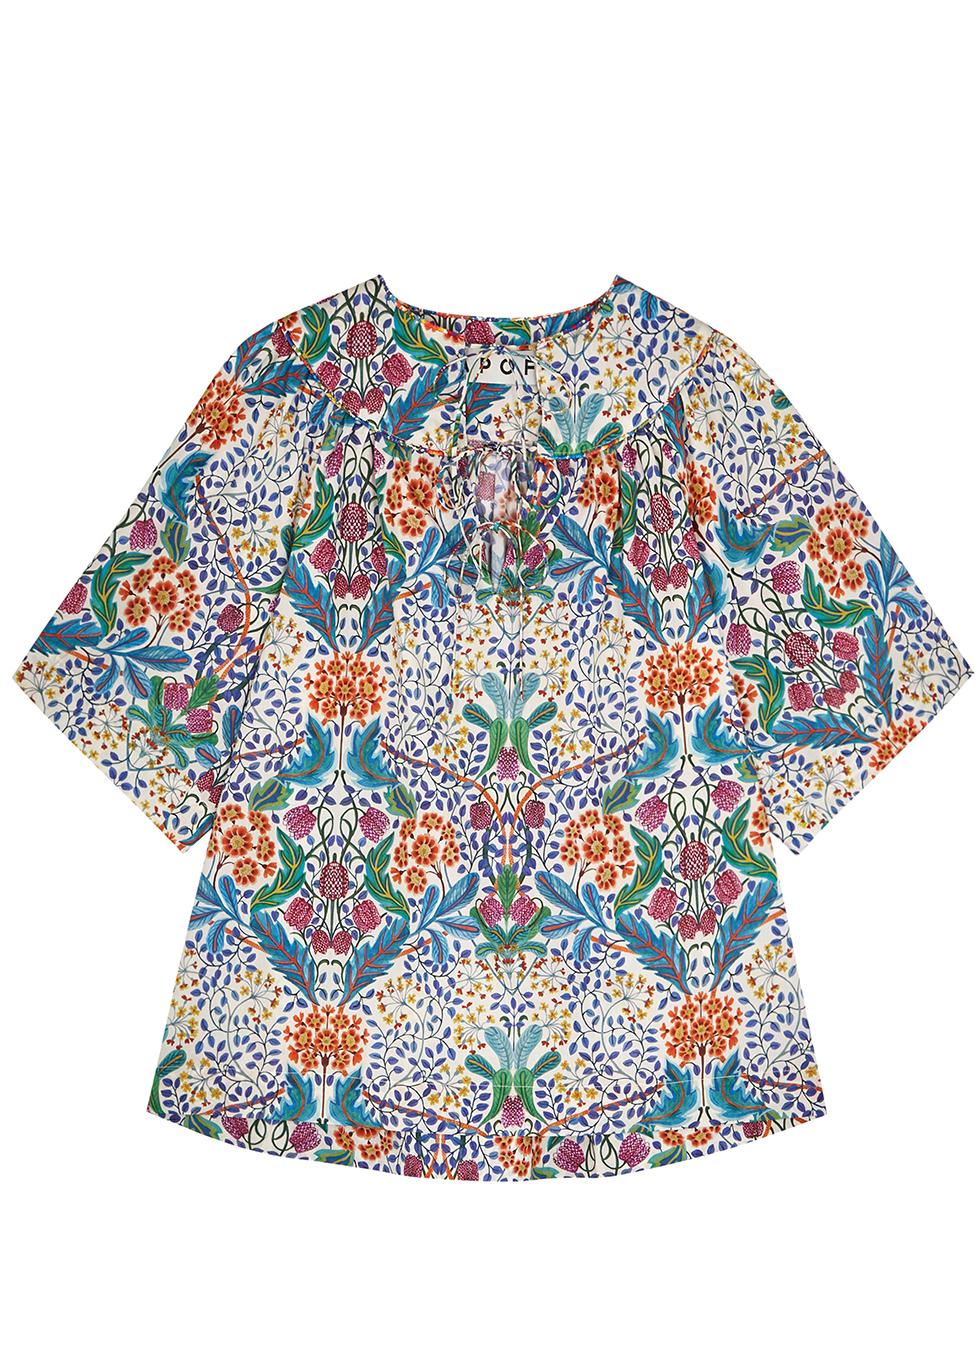 Alaia floral-print cotton blouse by APOF